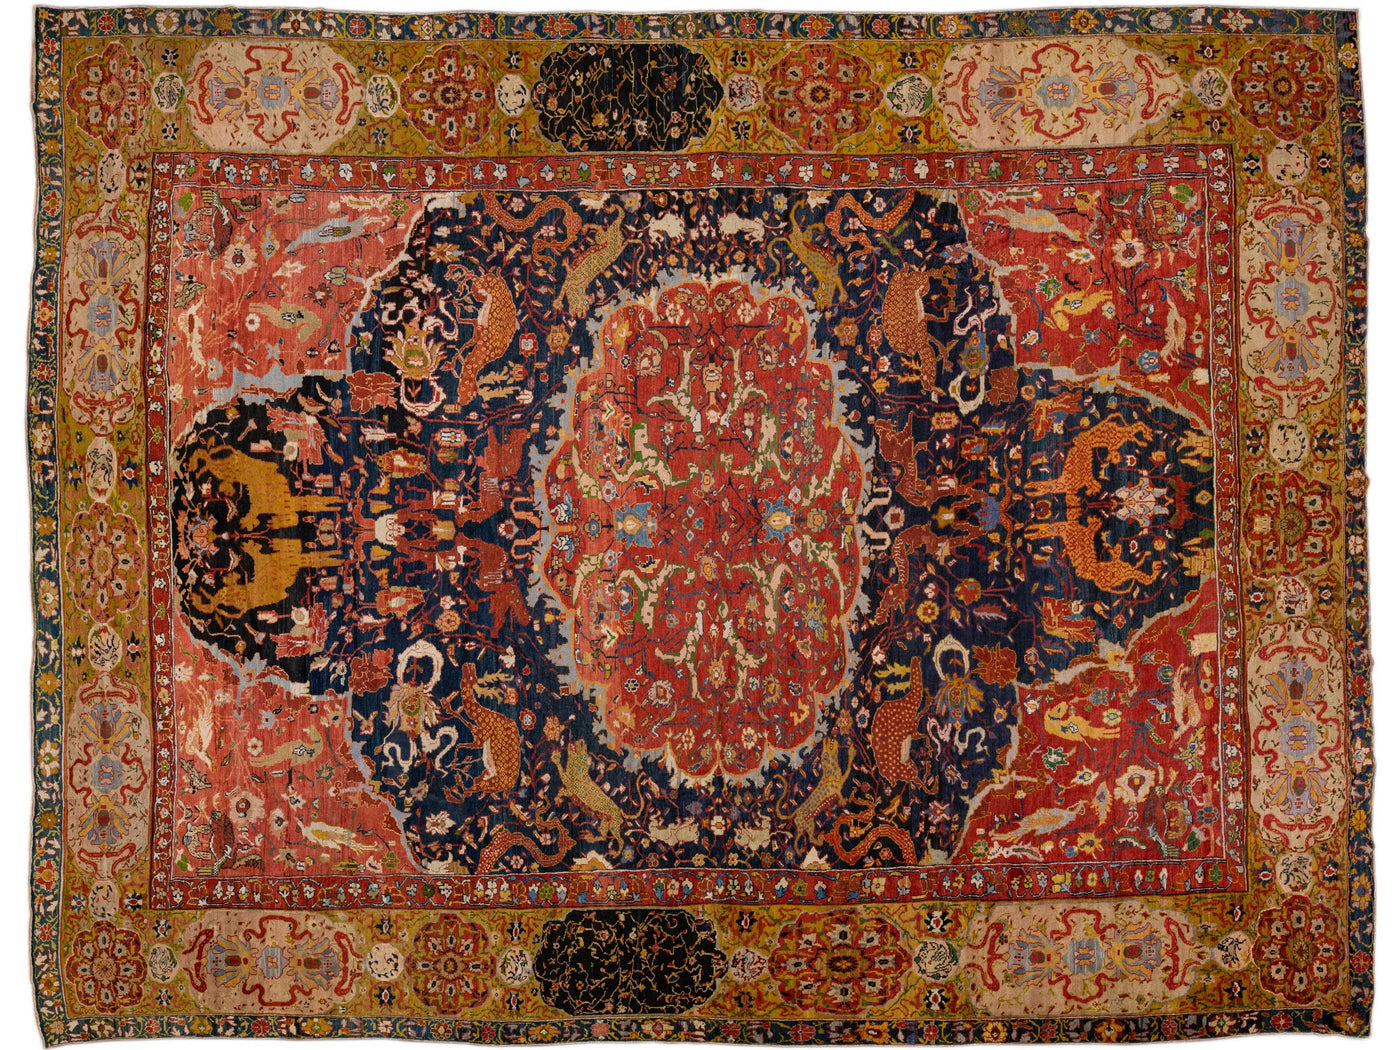 Multicolor Antique Sultanabad Handmade Mendallion Persian Wool Rug